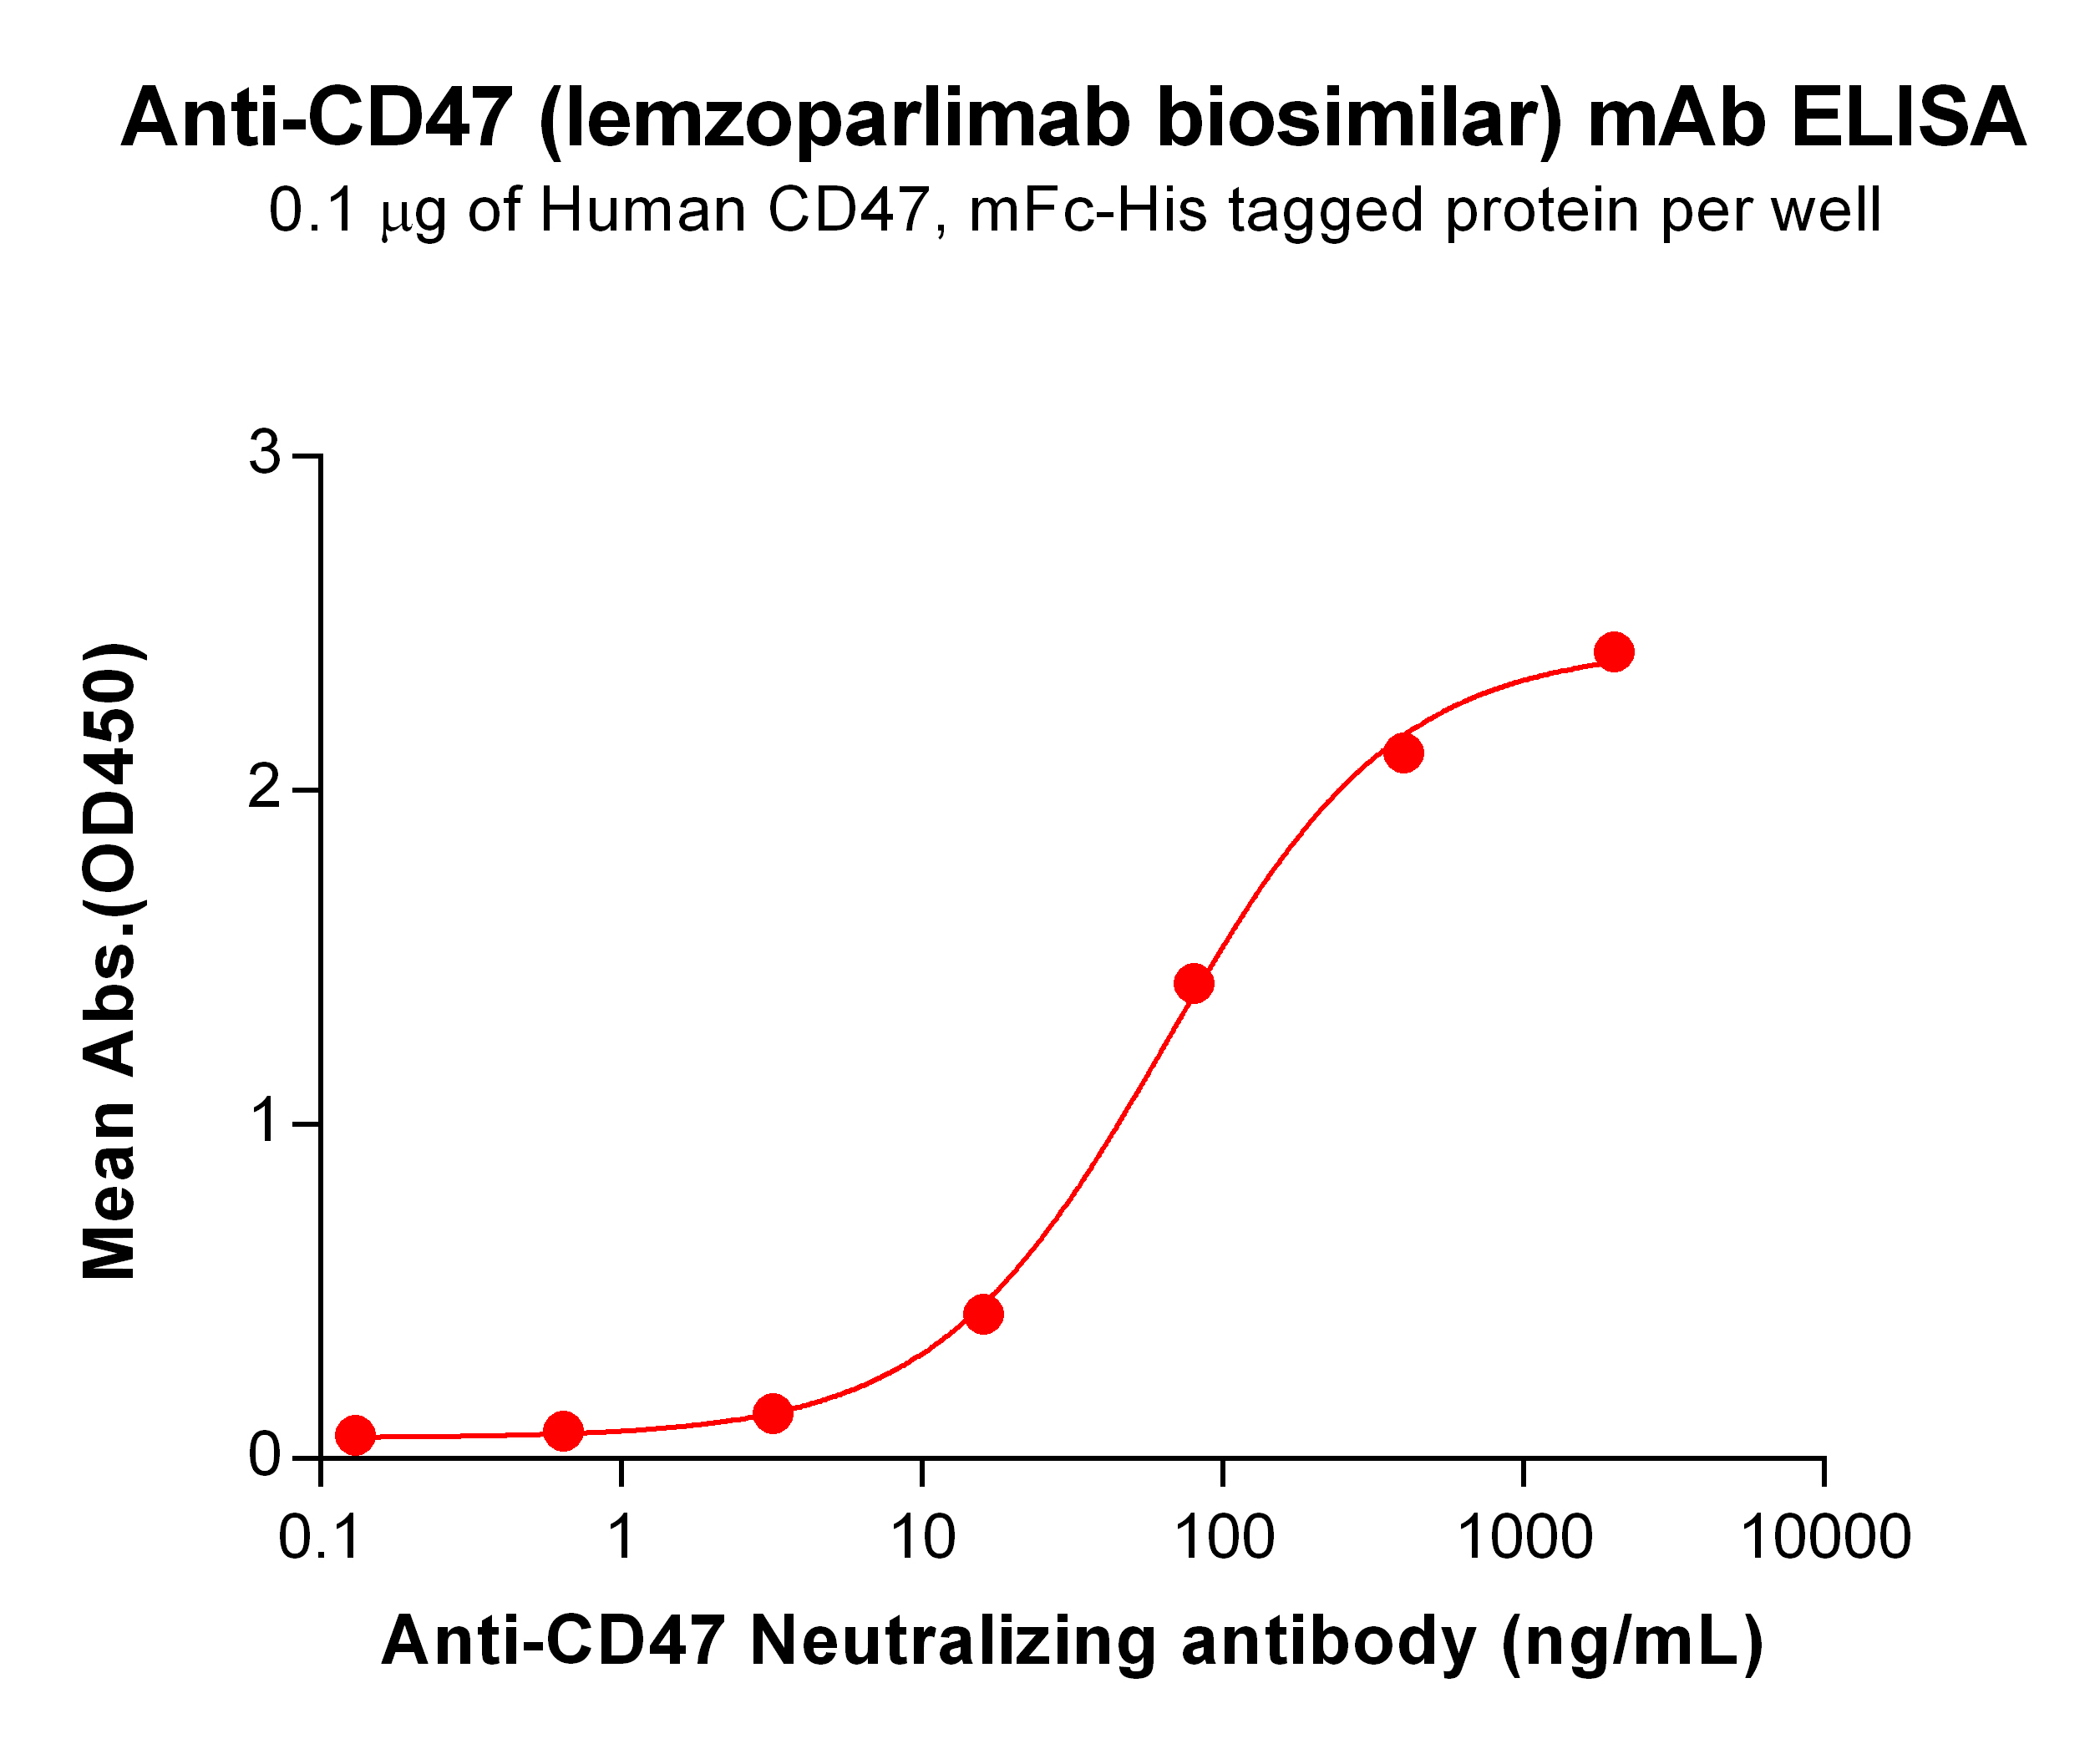 BME100076-Anti-CD47-Neutralizing-antibody-ELISA-Fig1.jpg